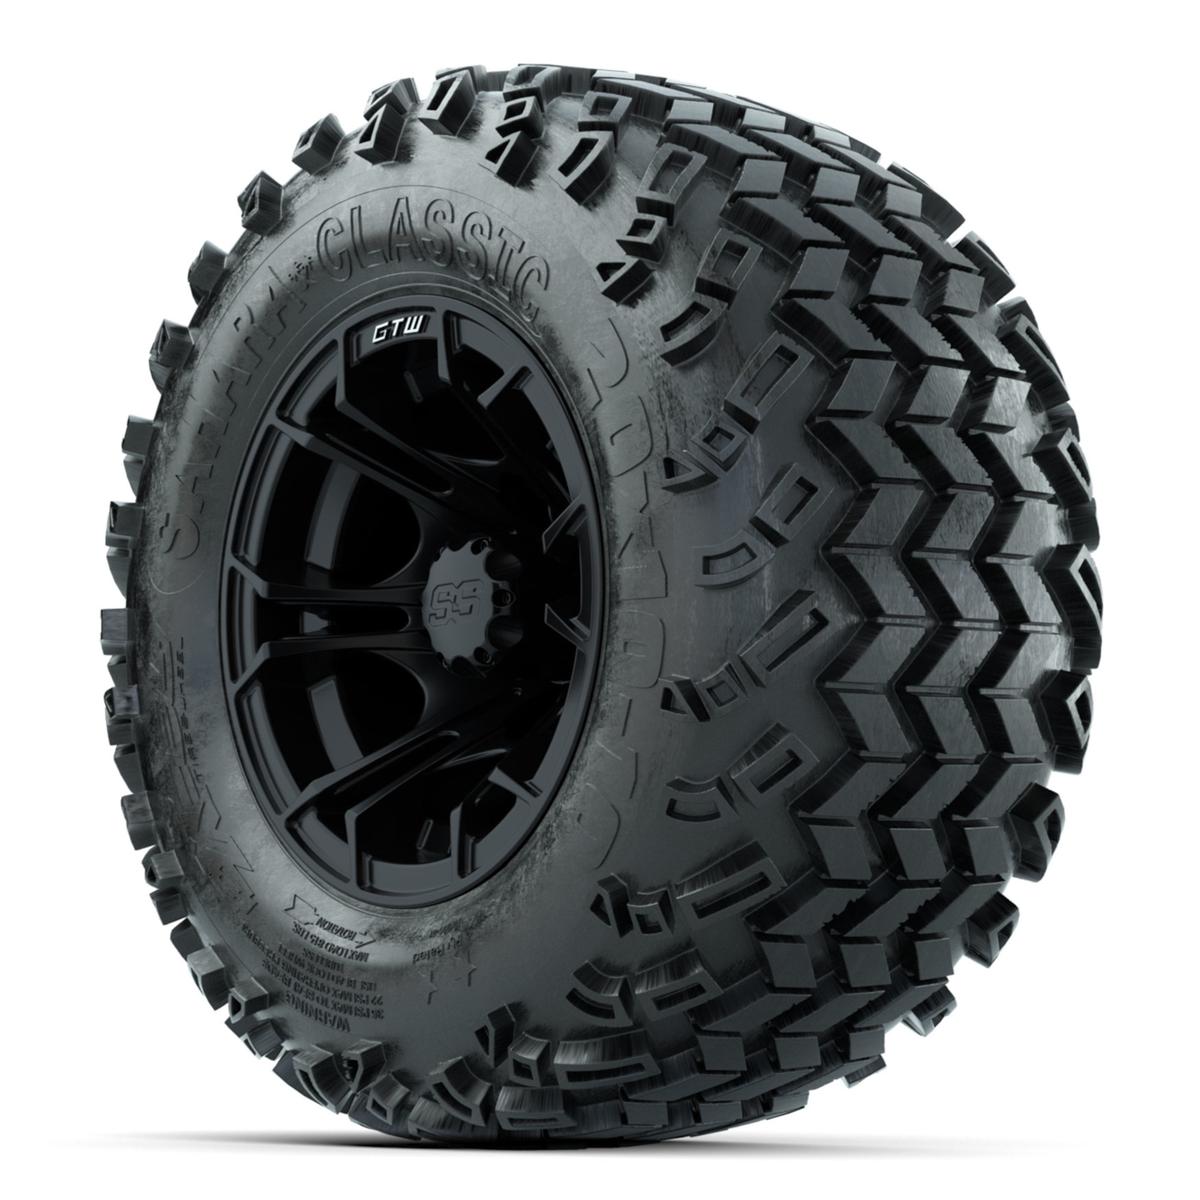 GTW Spyder Matte Black 10 in Wheels with 20x10-10 Sahara Classic All Terrain Tires – Full Set